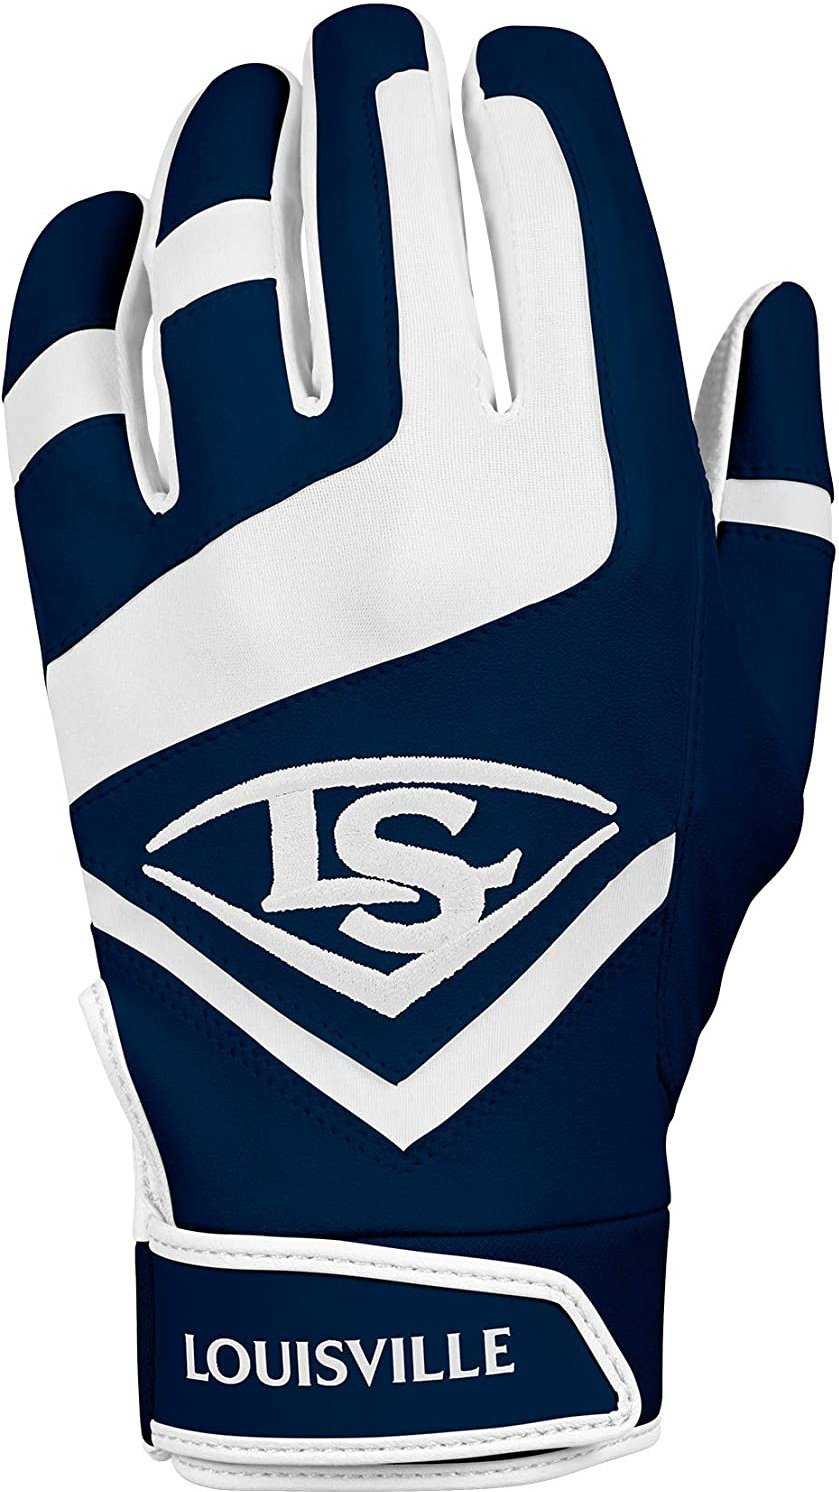 Louisville Slugger Genuine Batting Gloves - Navy - HIT A Double